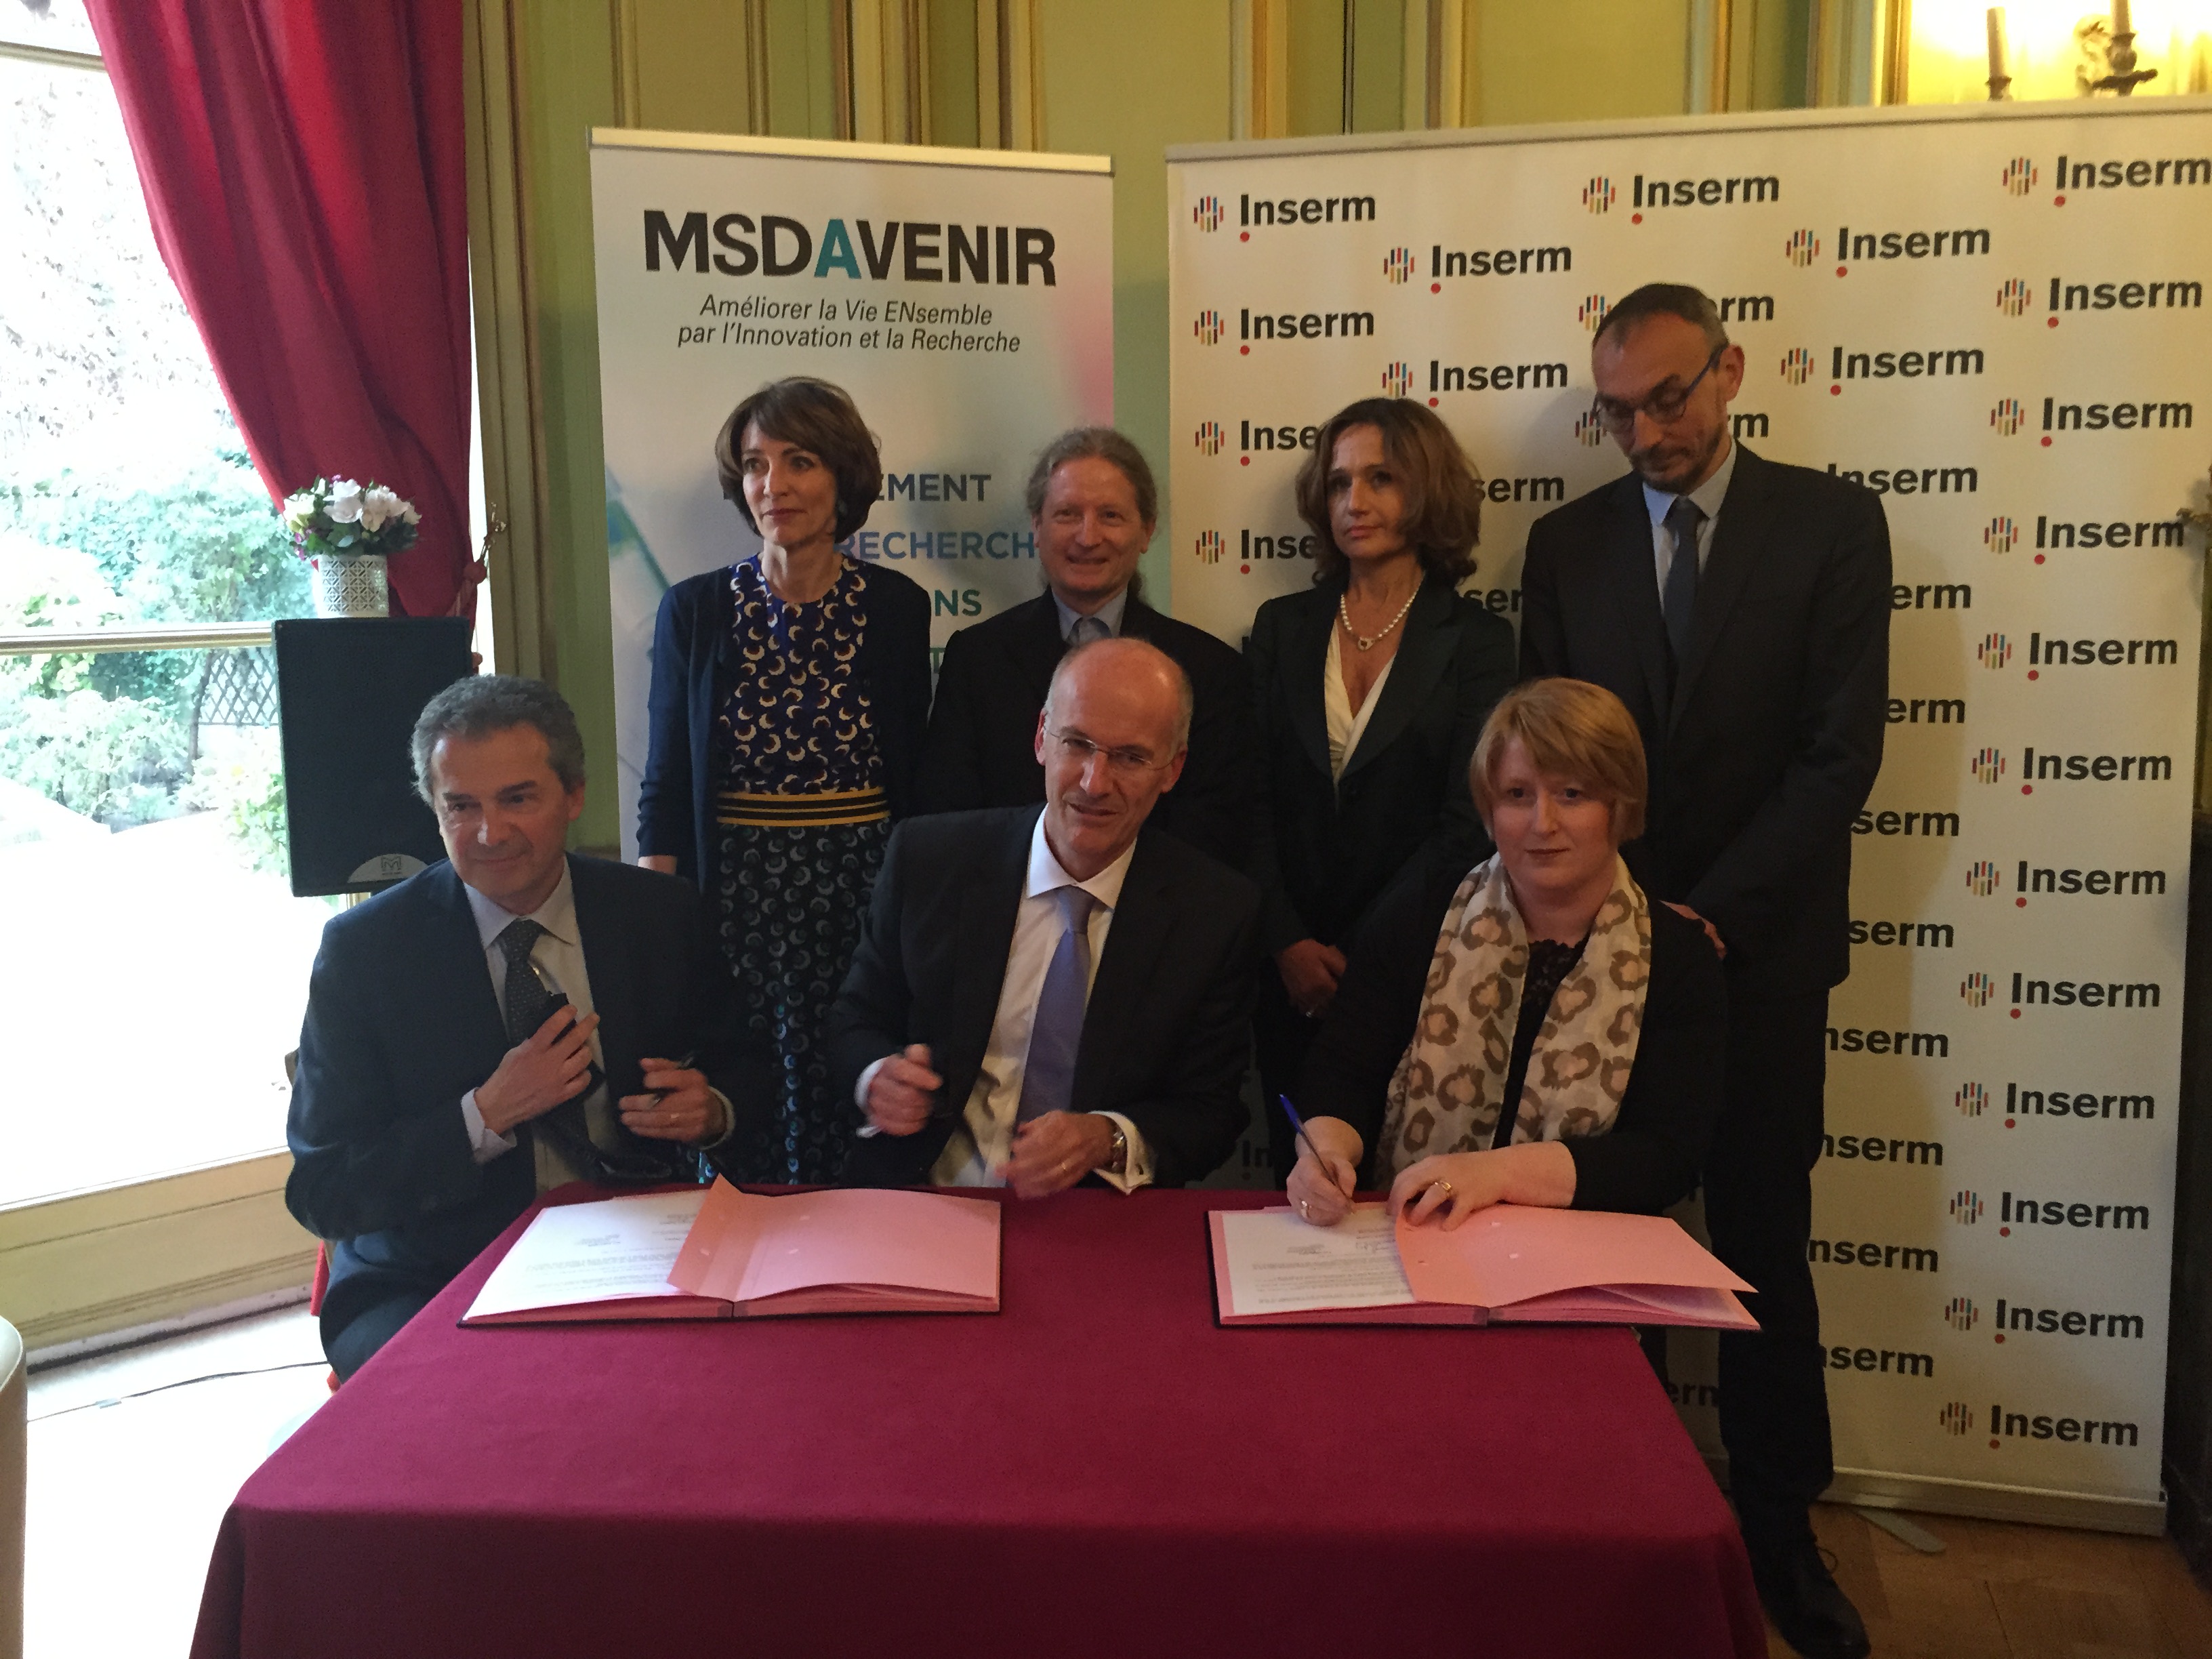 MSDAVENIR and Inserm sign a strategic framework agreement